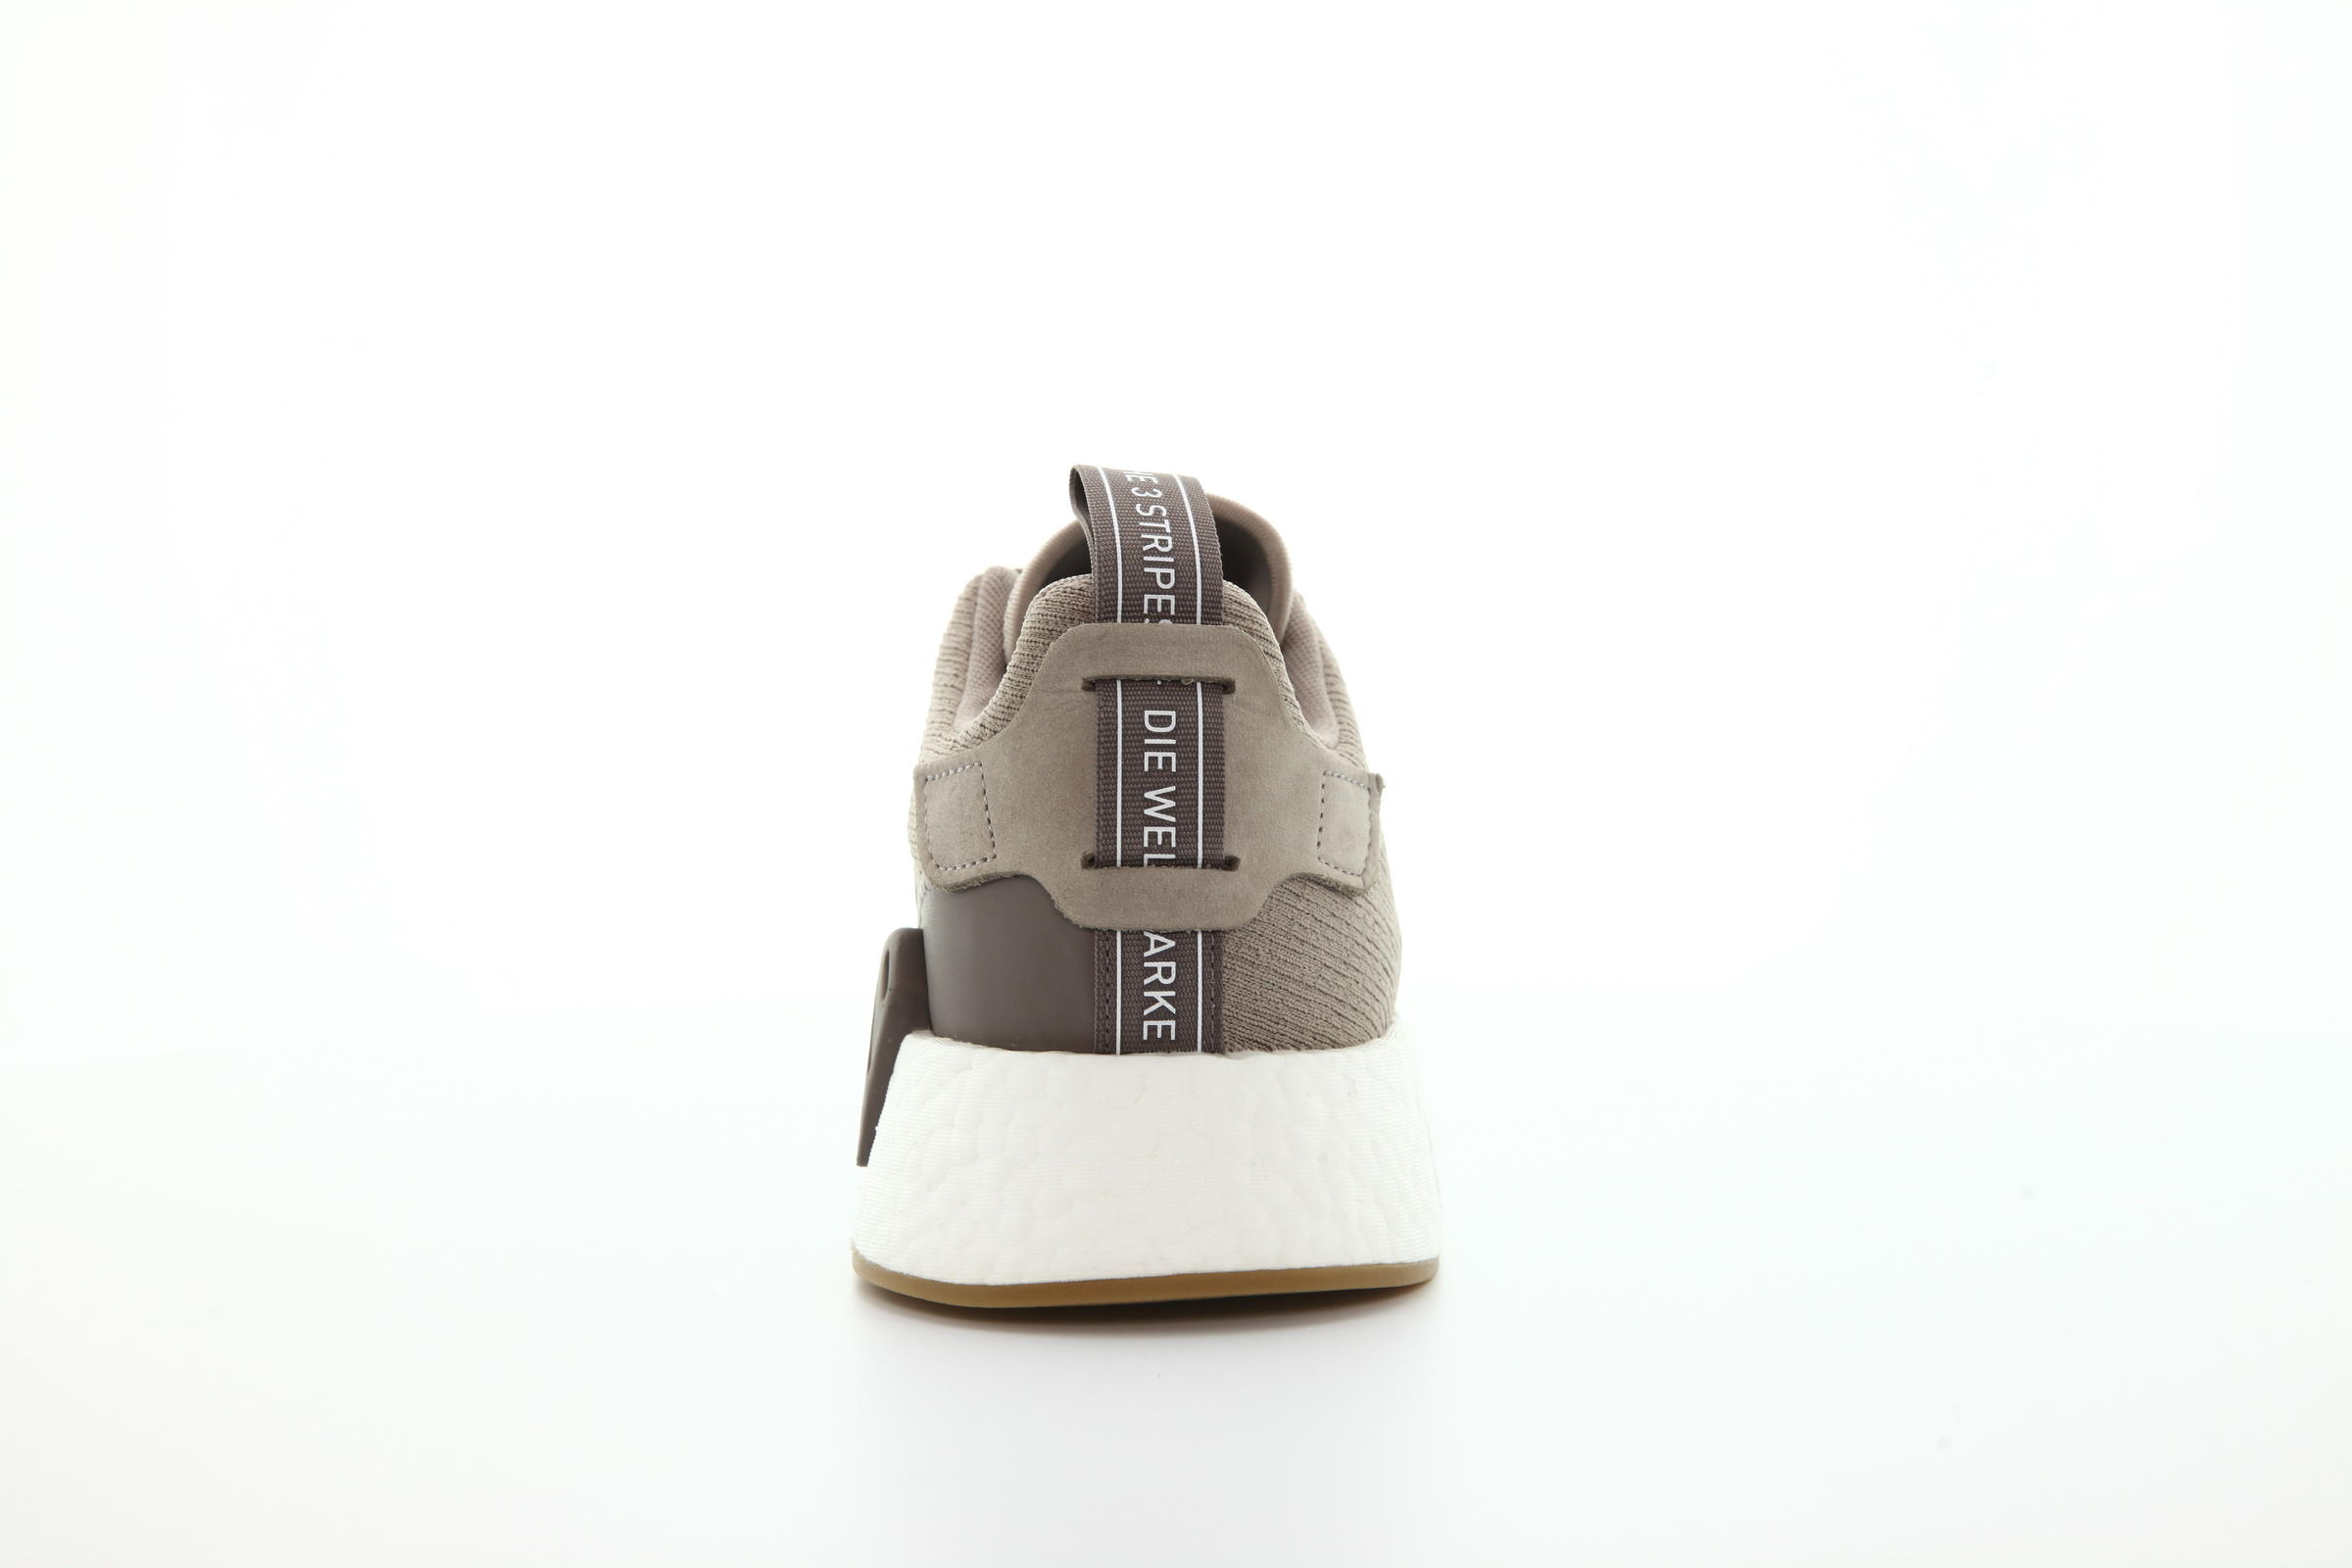 adidas Originals NMD_R2 Runner Basic Knit Dec "Vapour Grey"